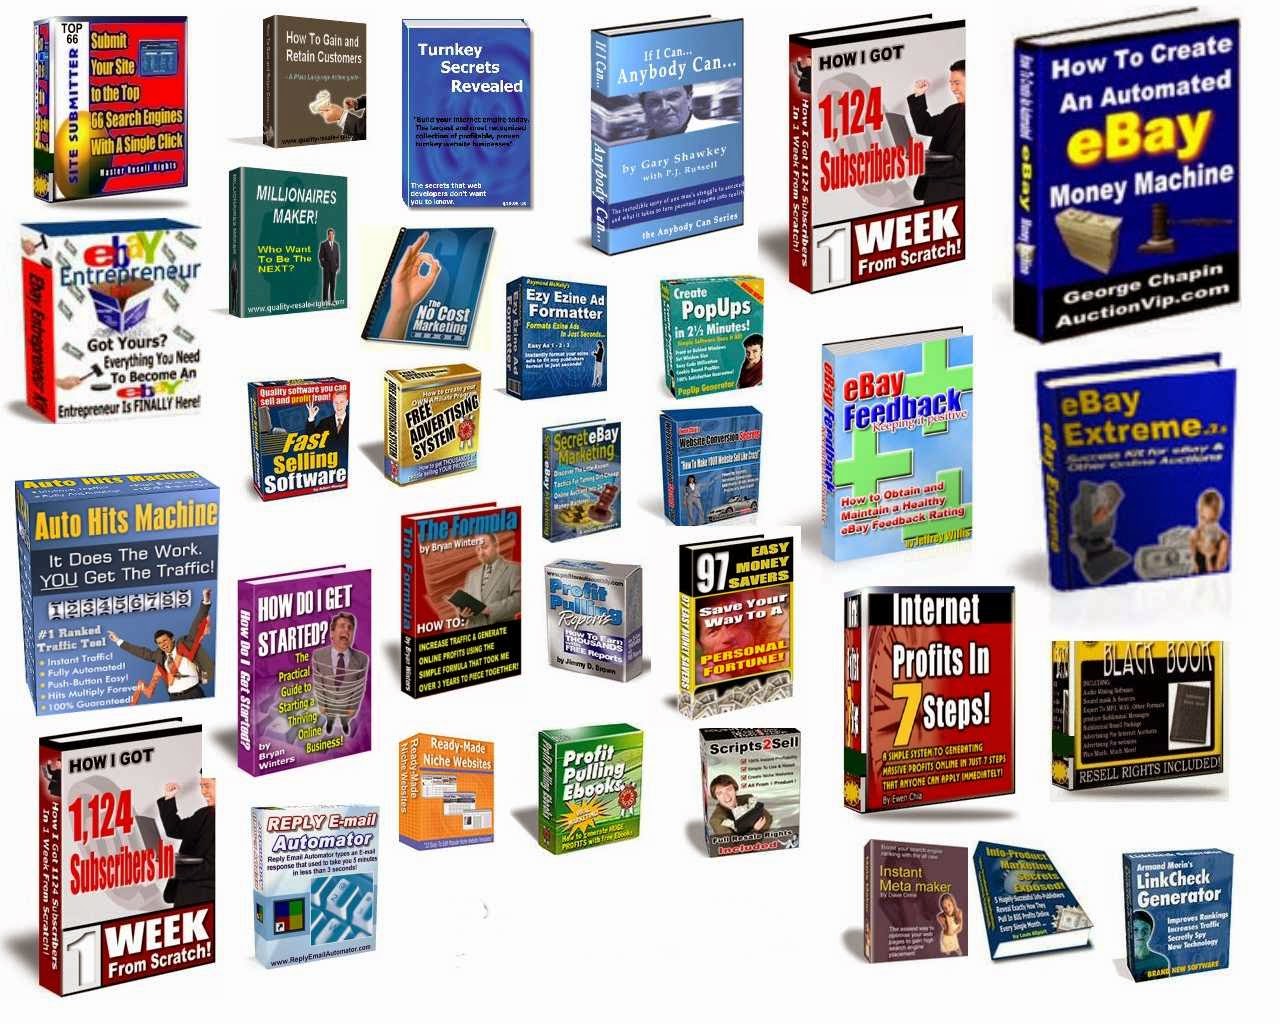 220 ebooks and Software - Ebay, Amazon, Web Traffics, Clickbank, Facebook & more